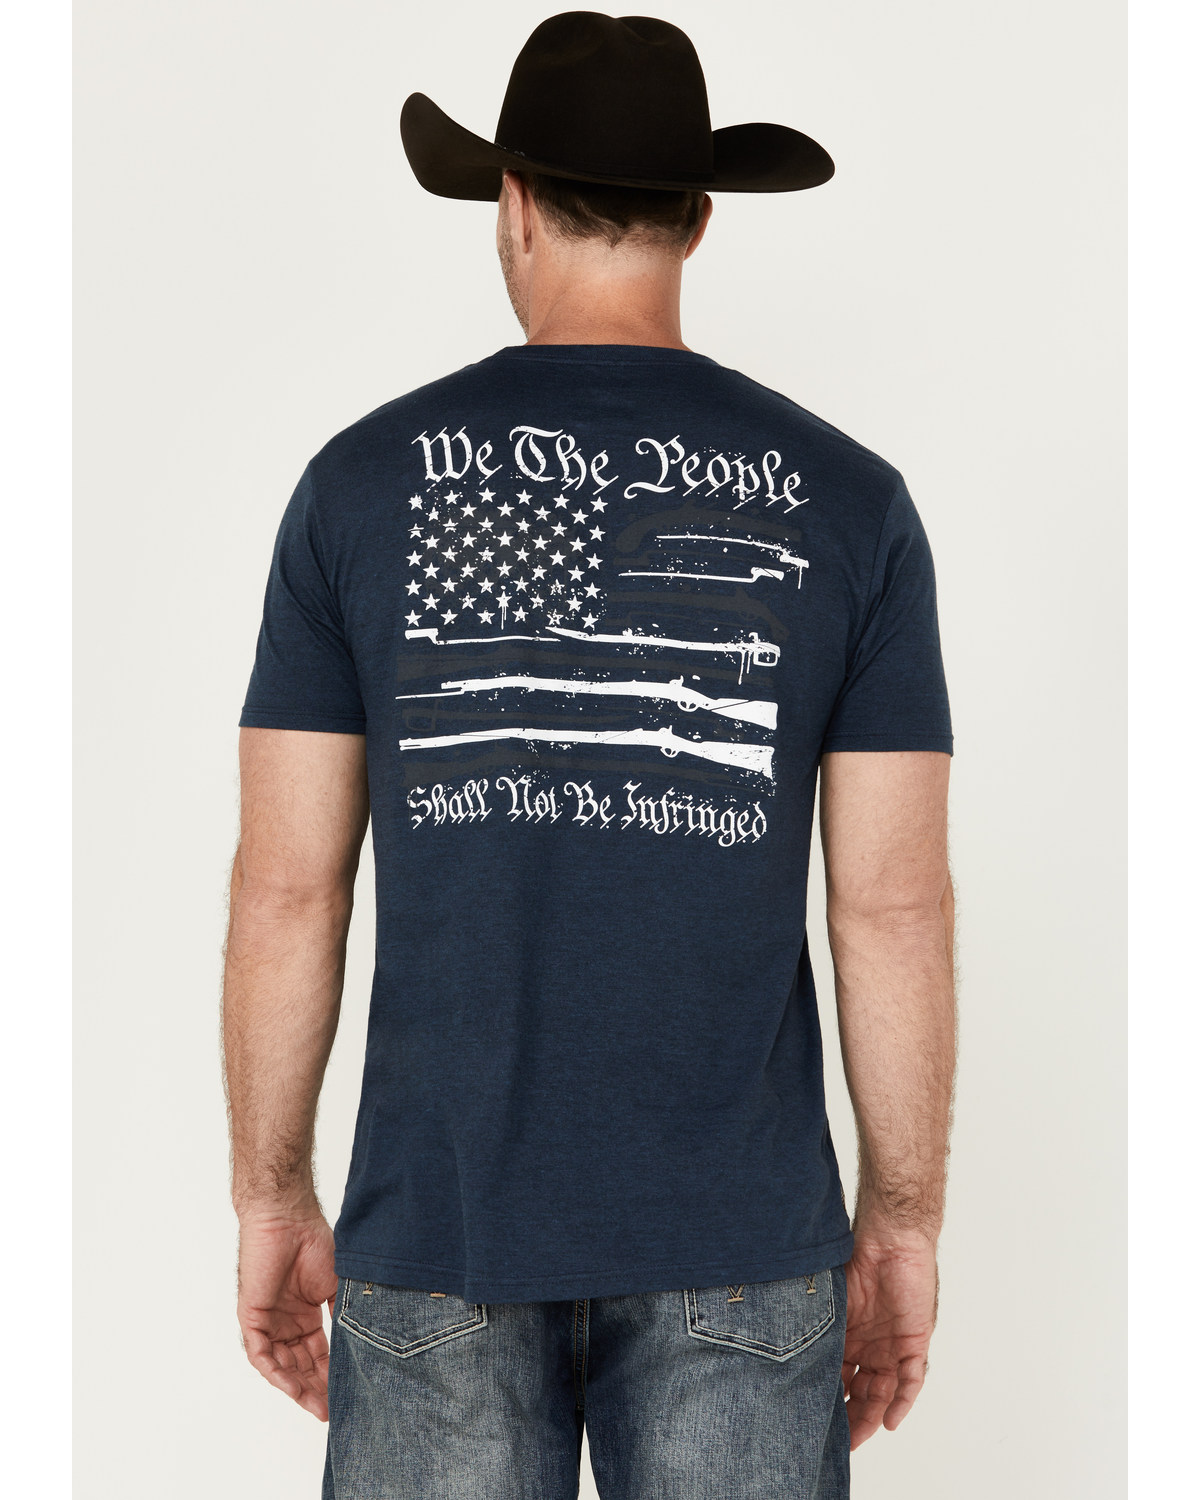 Howitzer Men's Infringed Short Sleeve Graphic T-Shirt